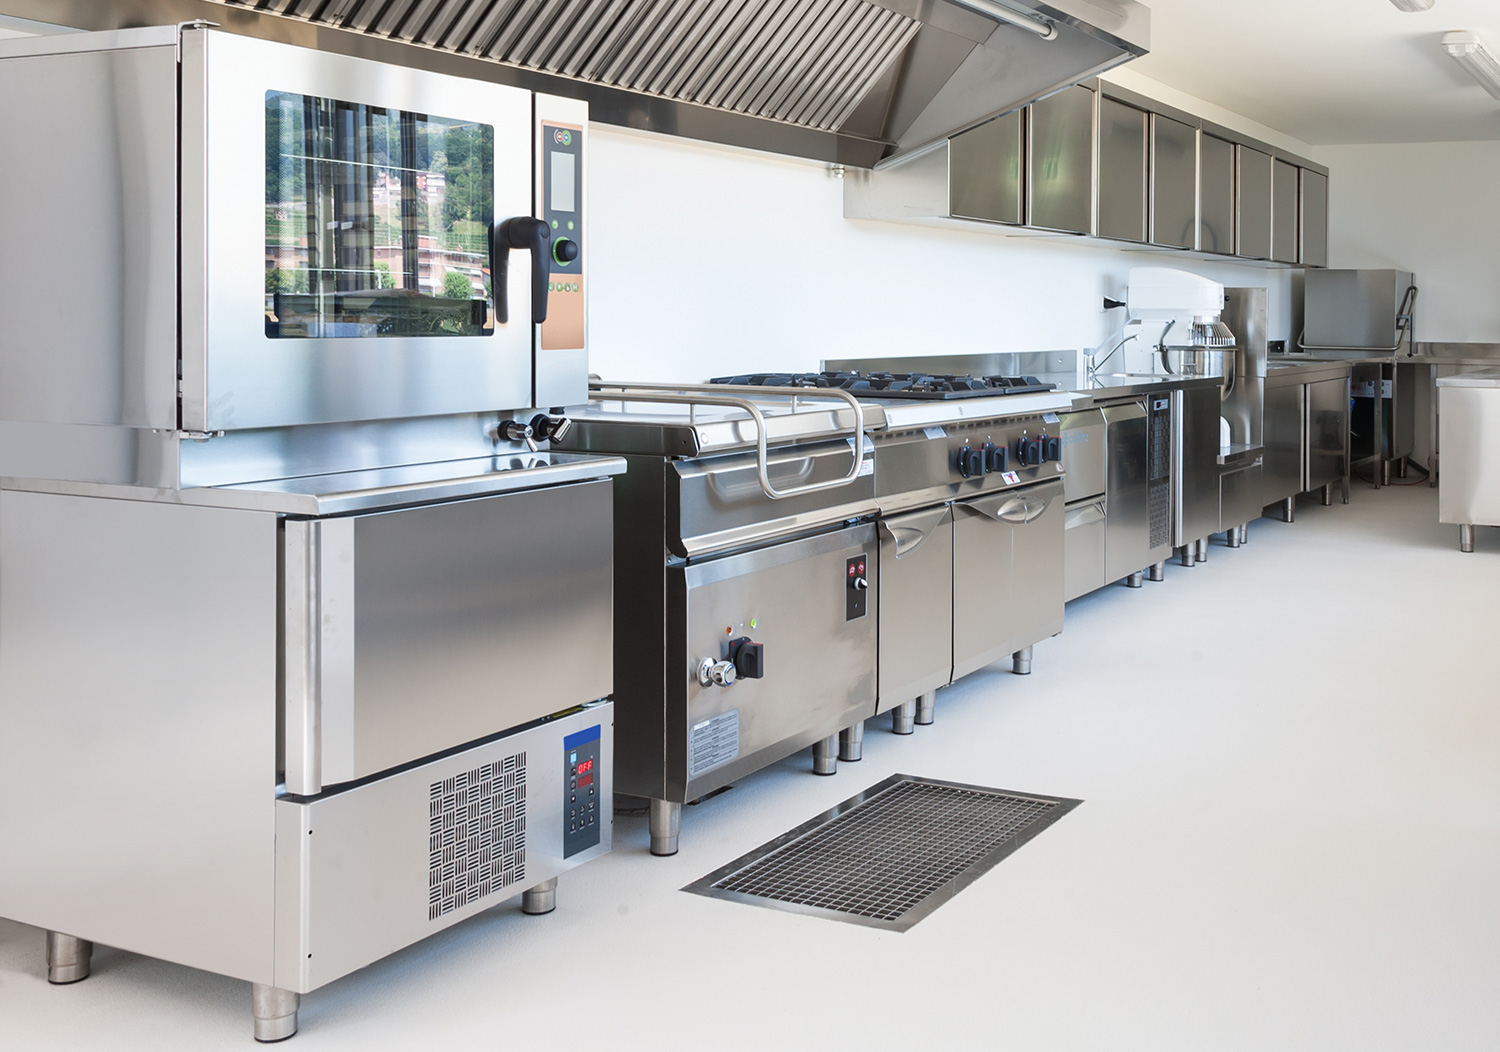 institutional kitchen design guidelines